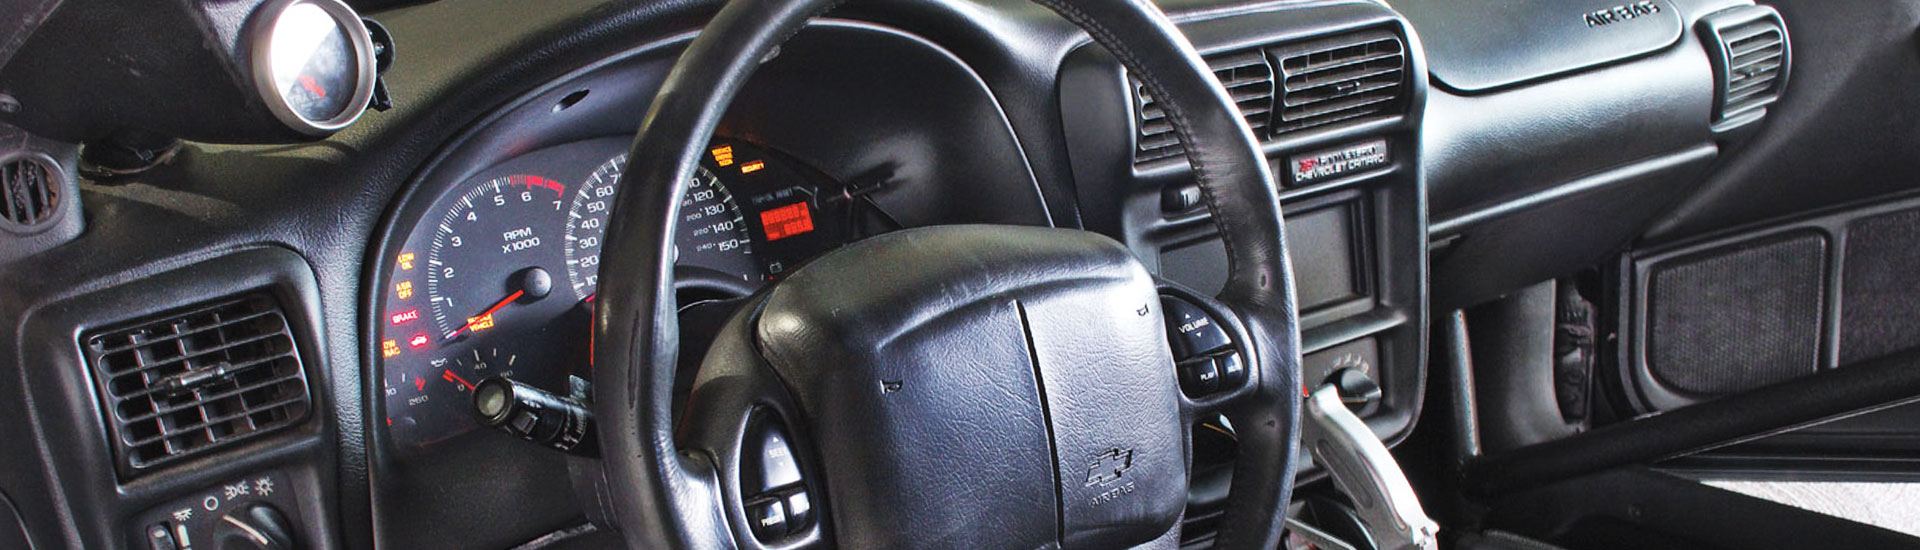 2002 Chevrolet Camaro Dash Kits